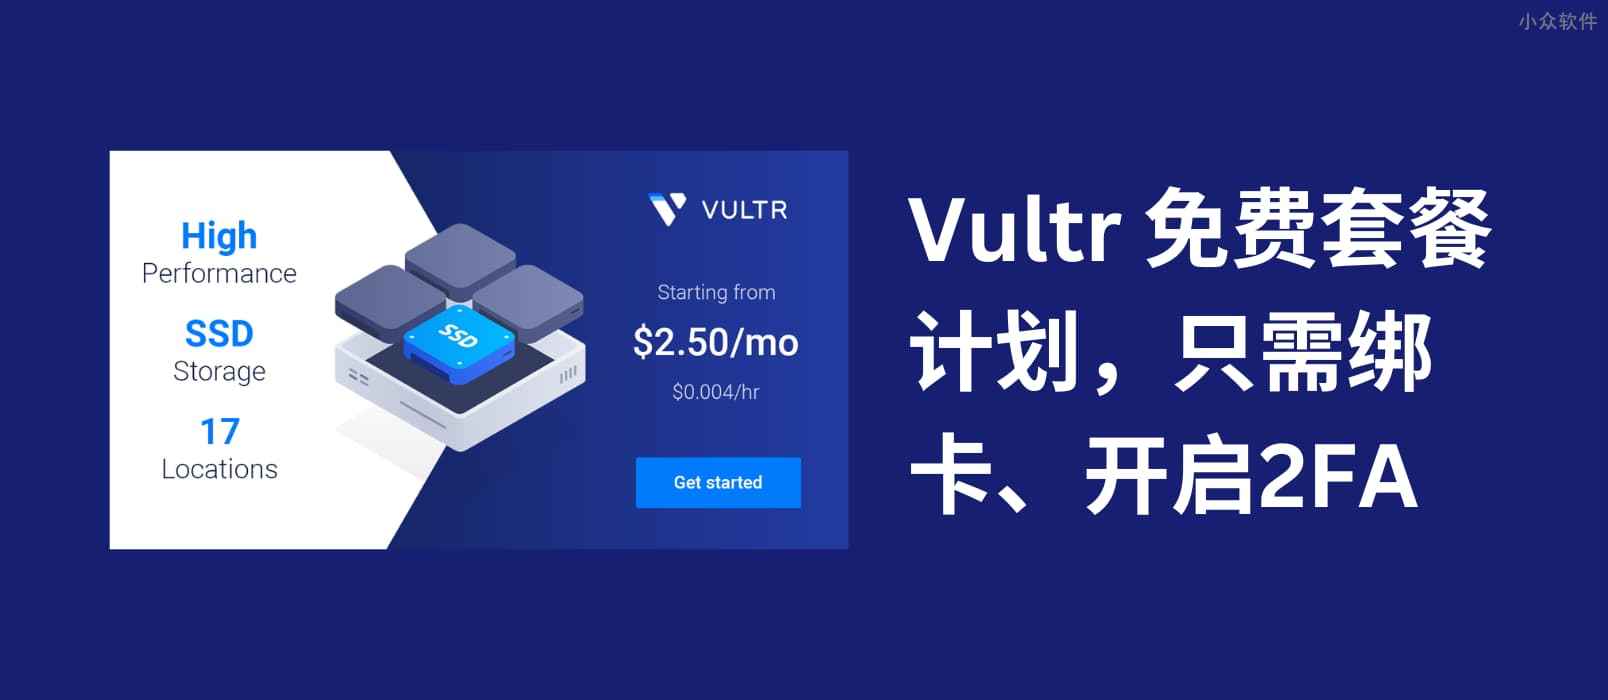 Vultr 推出免费套餐计划，只需绑卡、2FA 即可申请